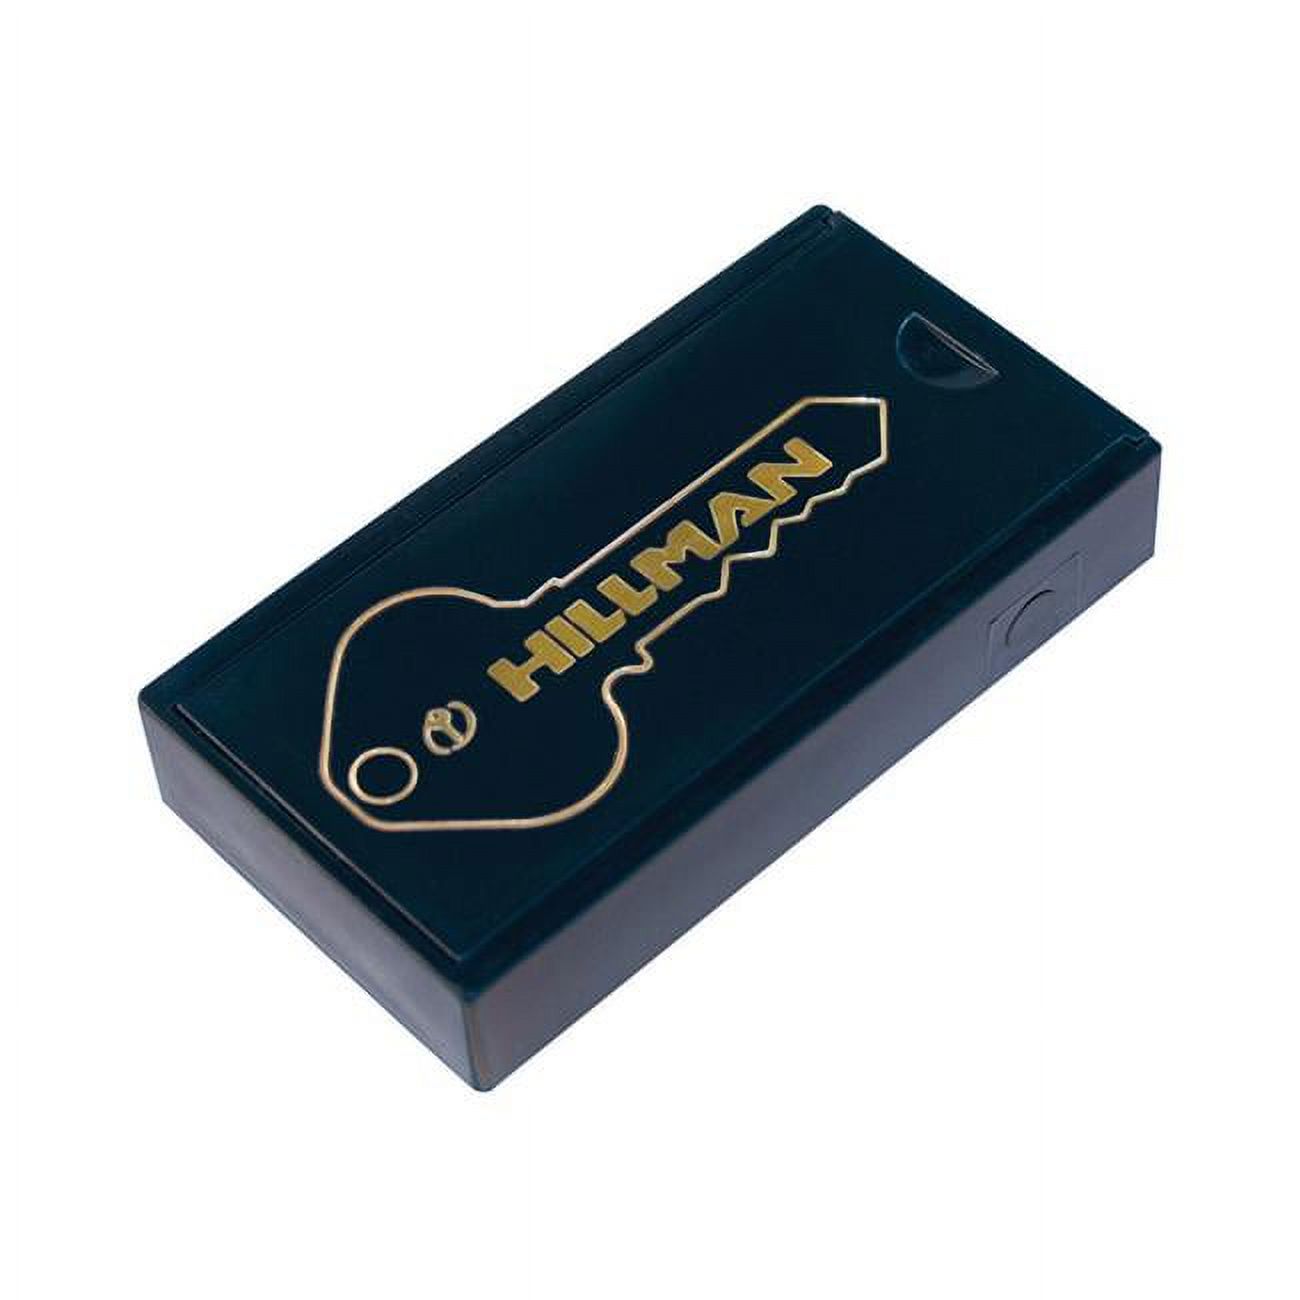 Hillman Plastic Magnetic Key Case Black - image 1 of 2